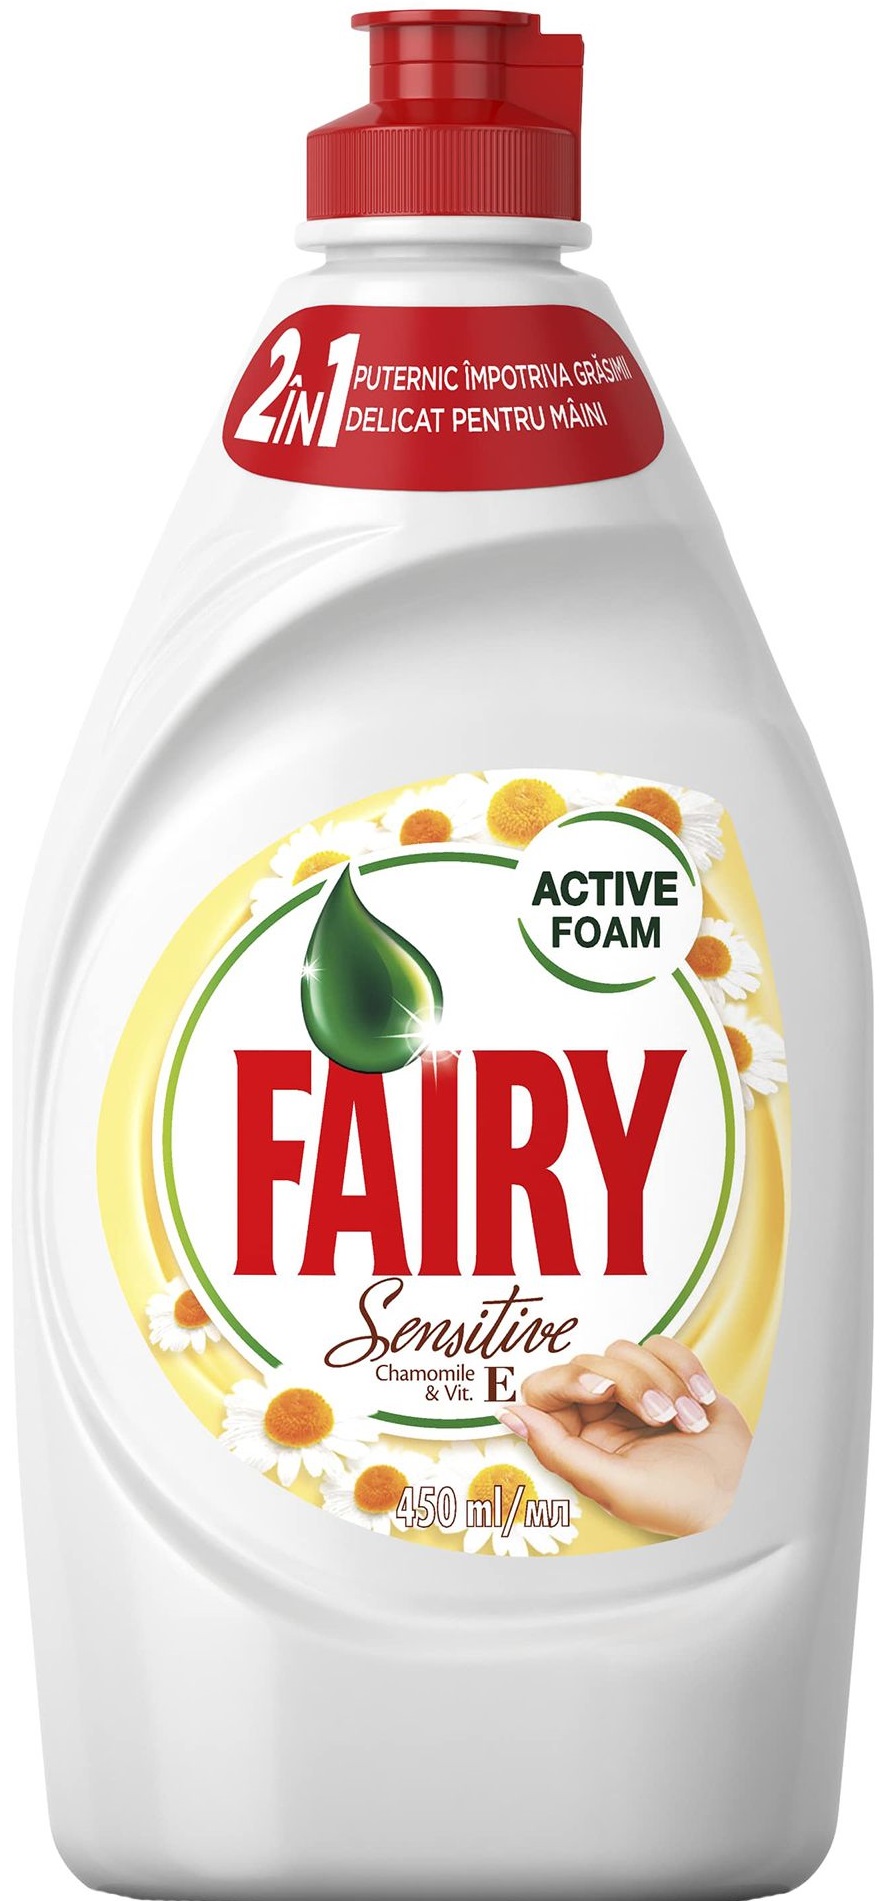 Detergent de vase FAIRY Sensitive Chamomile and Vitamin E, 450ml